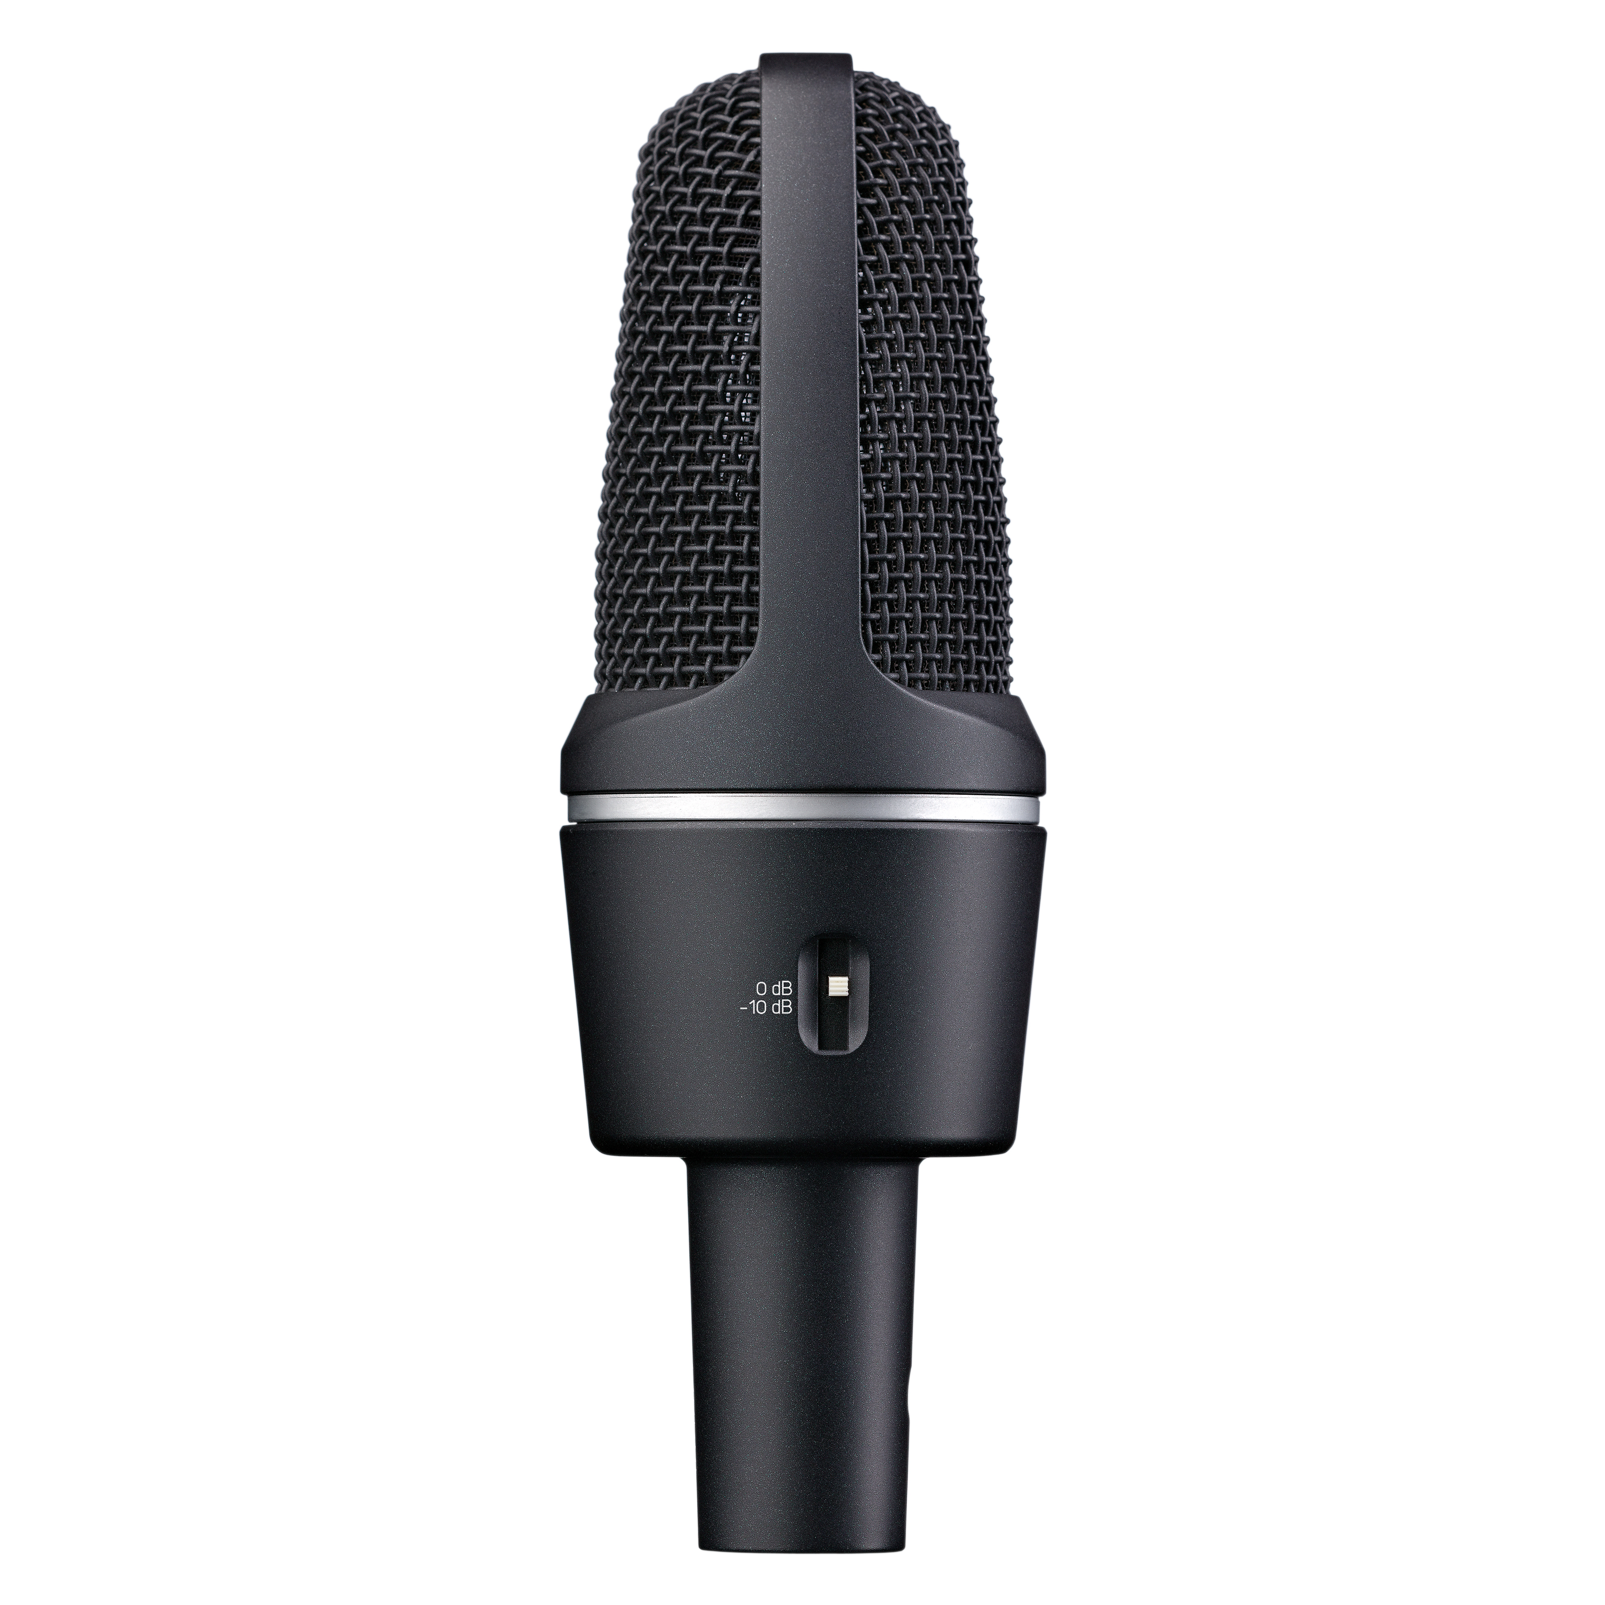 C3000 - Black - High-performance large-diaphragm condenser microphone - Detailshot 1